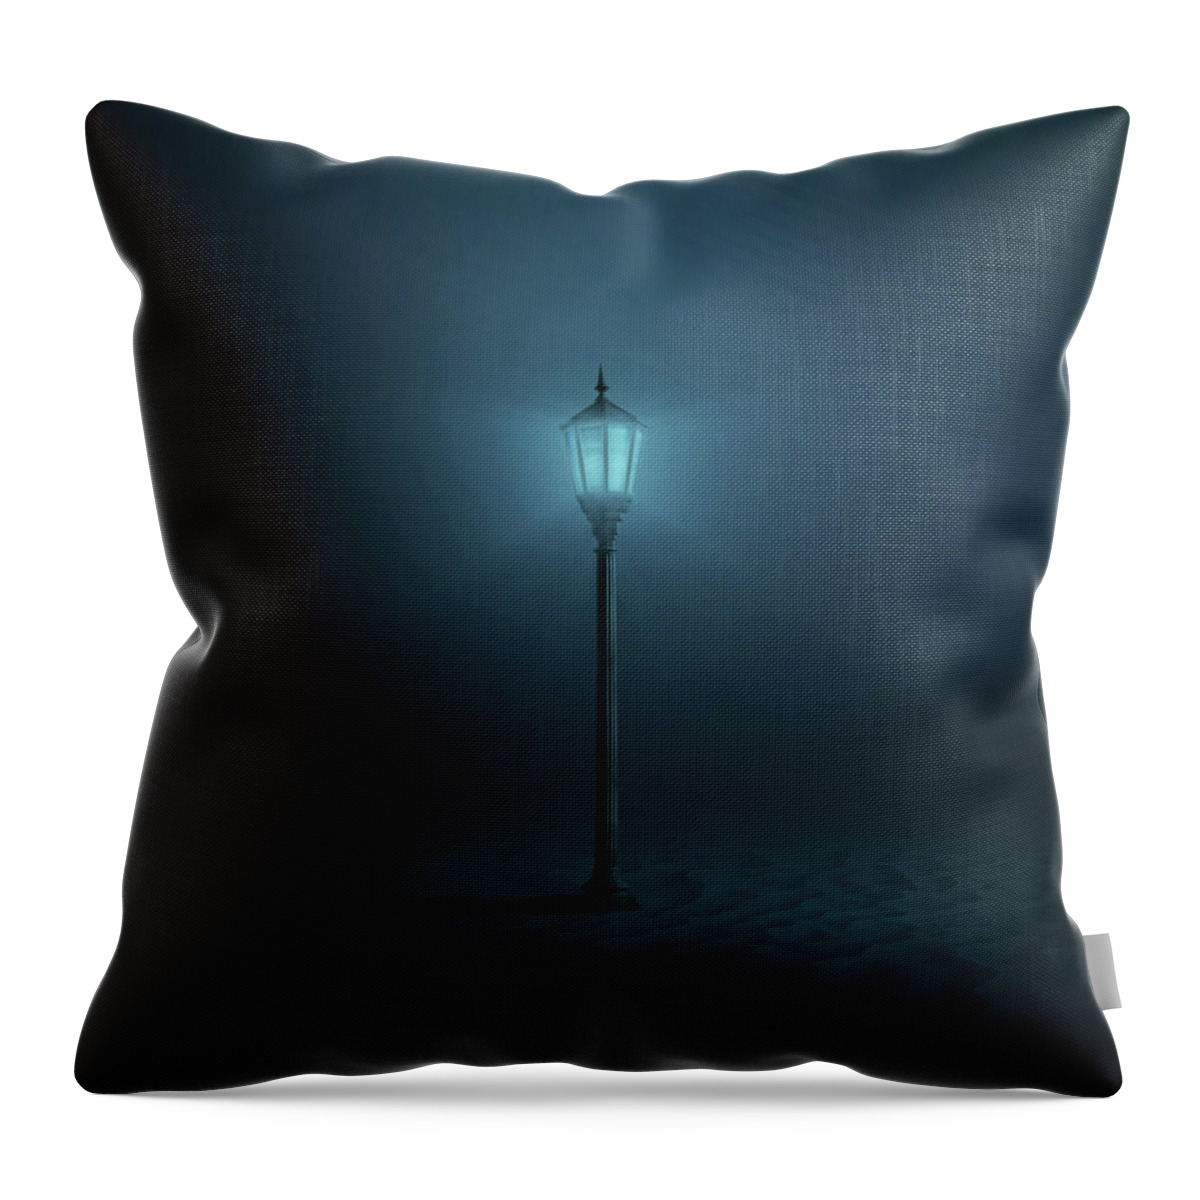 Bluen Throw Pillow featuring the digital art Underwater by Zoltan Toth